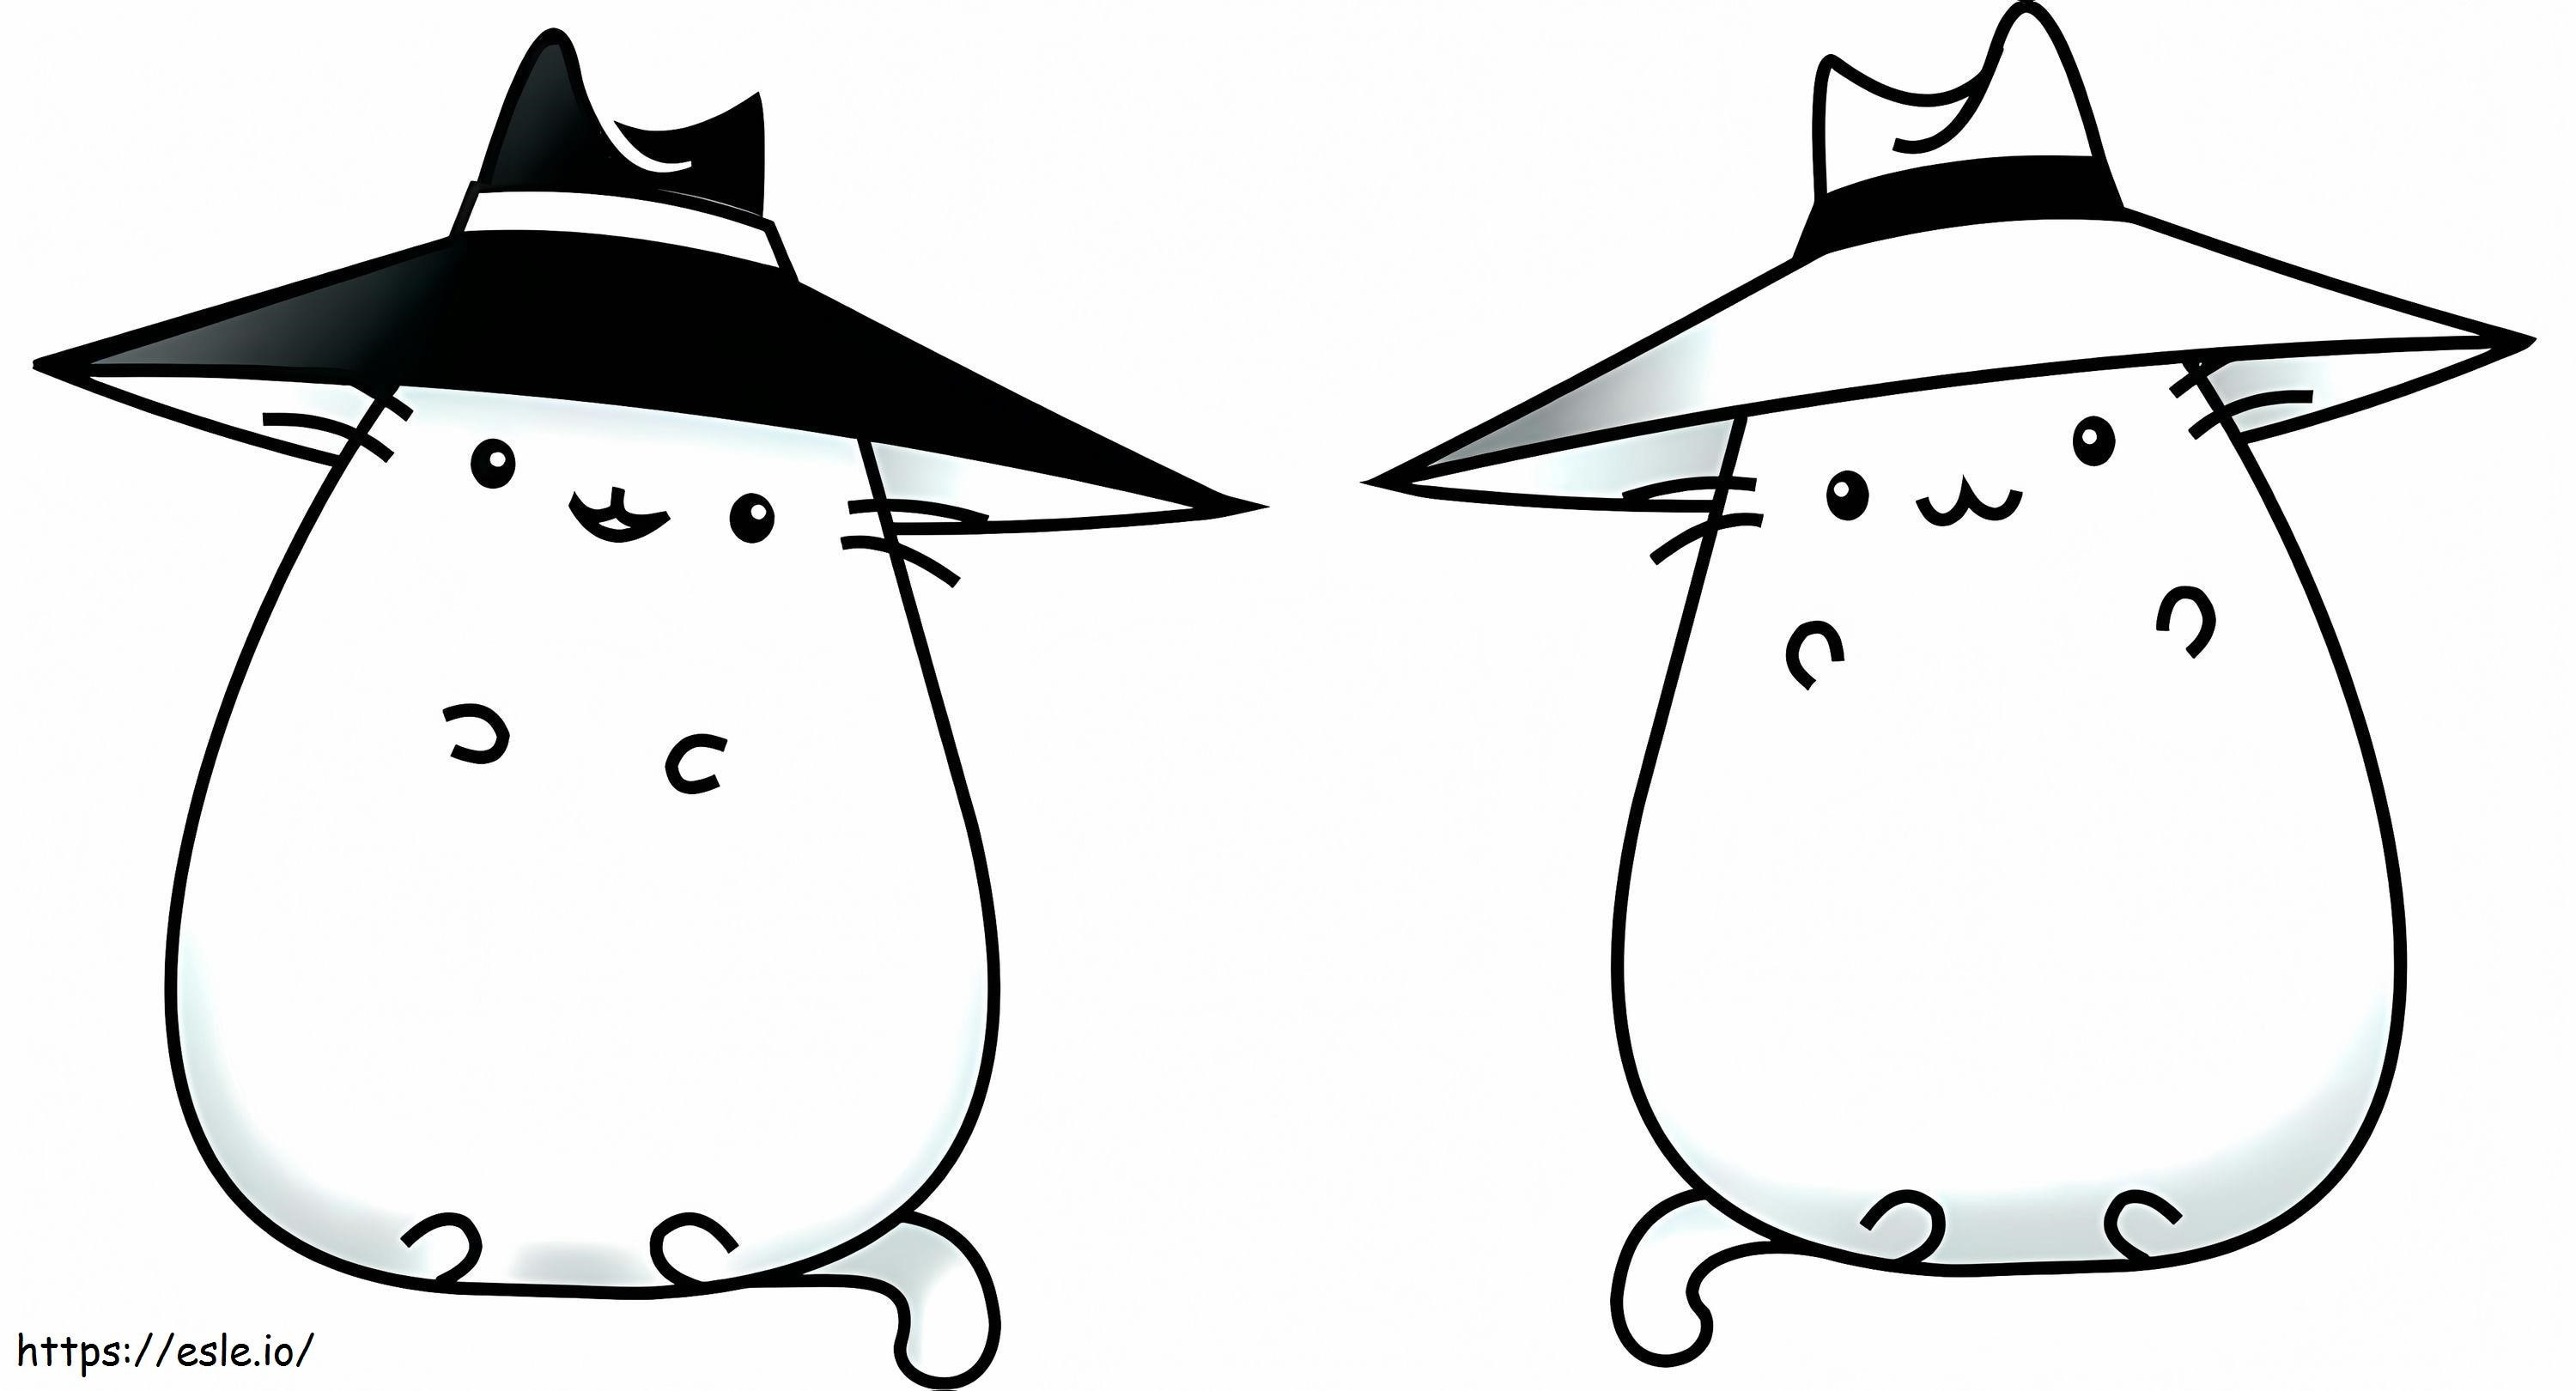  Pusheen kot dla kota wraz z nadrukiem A kot pusheen kot czarno-biały kolorowanka